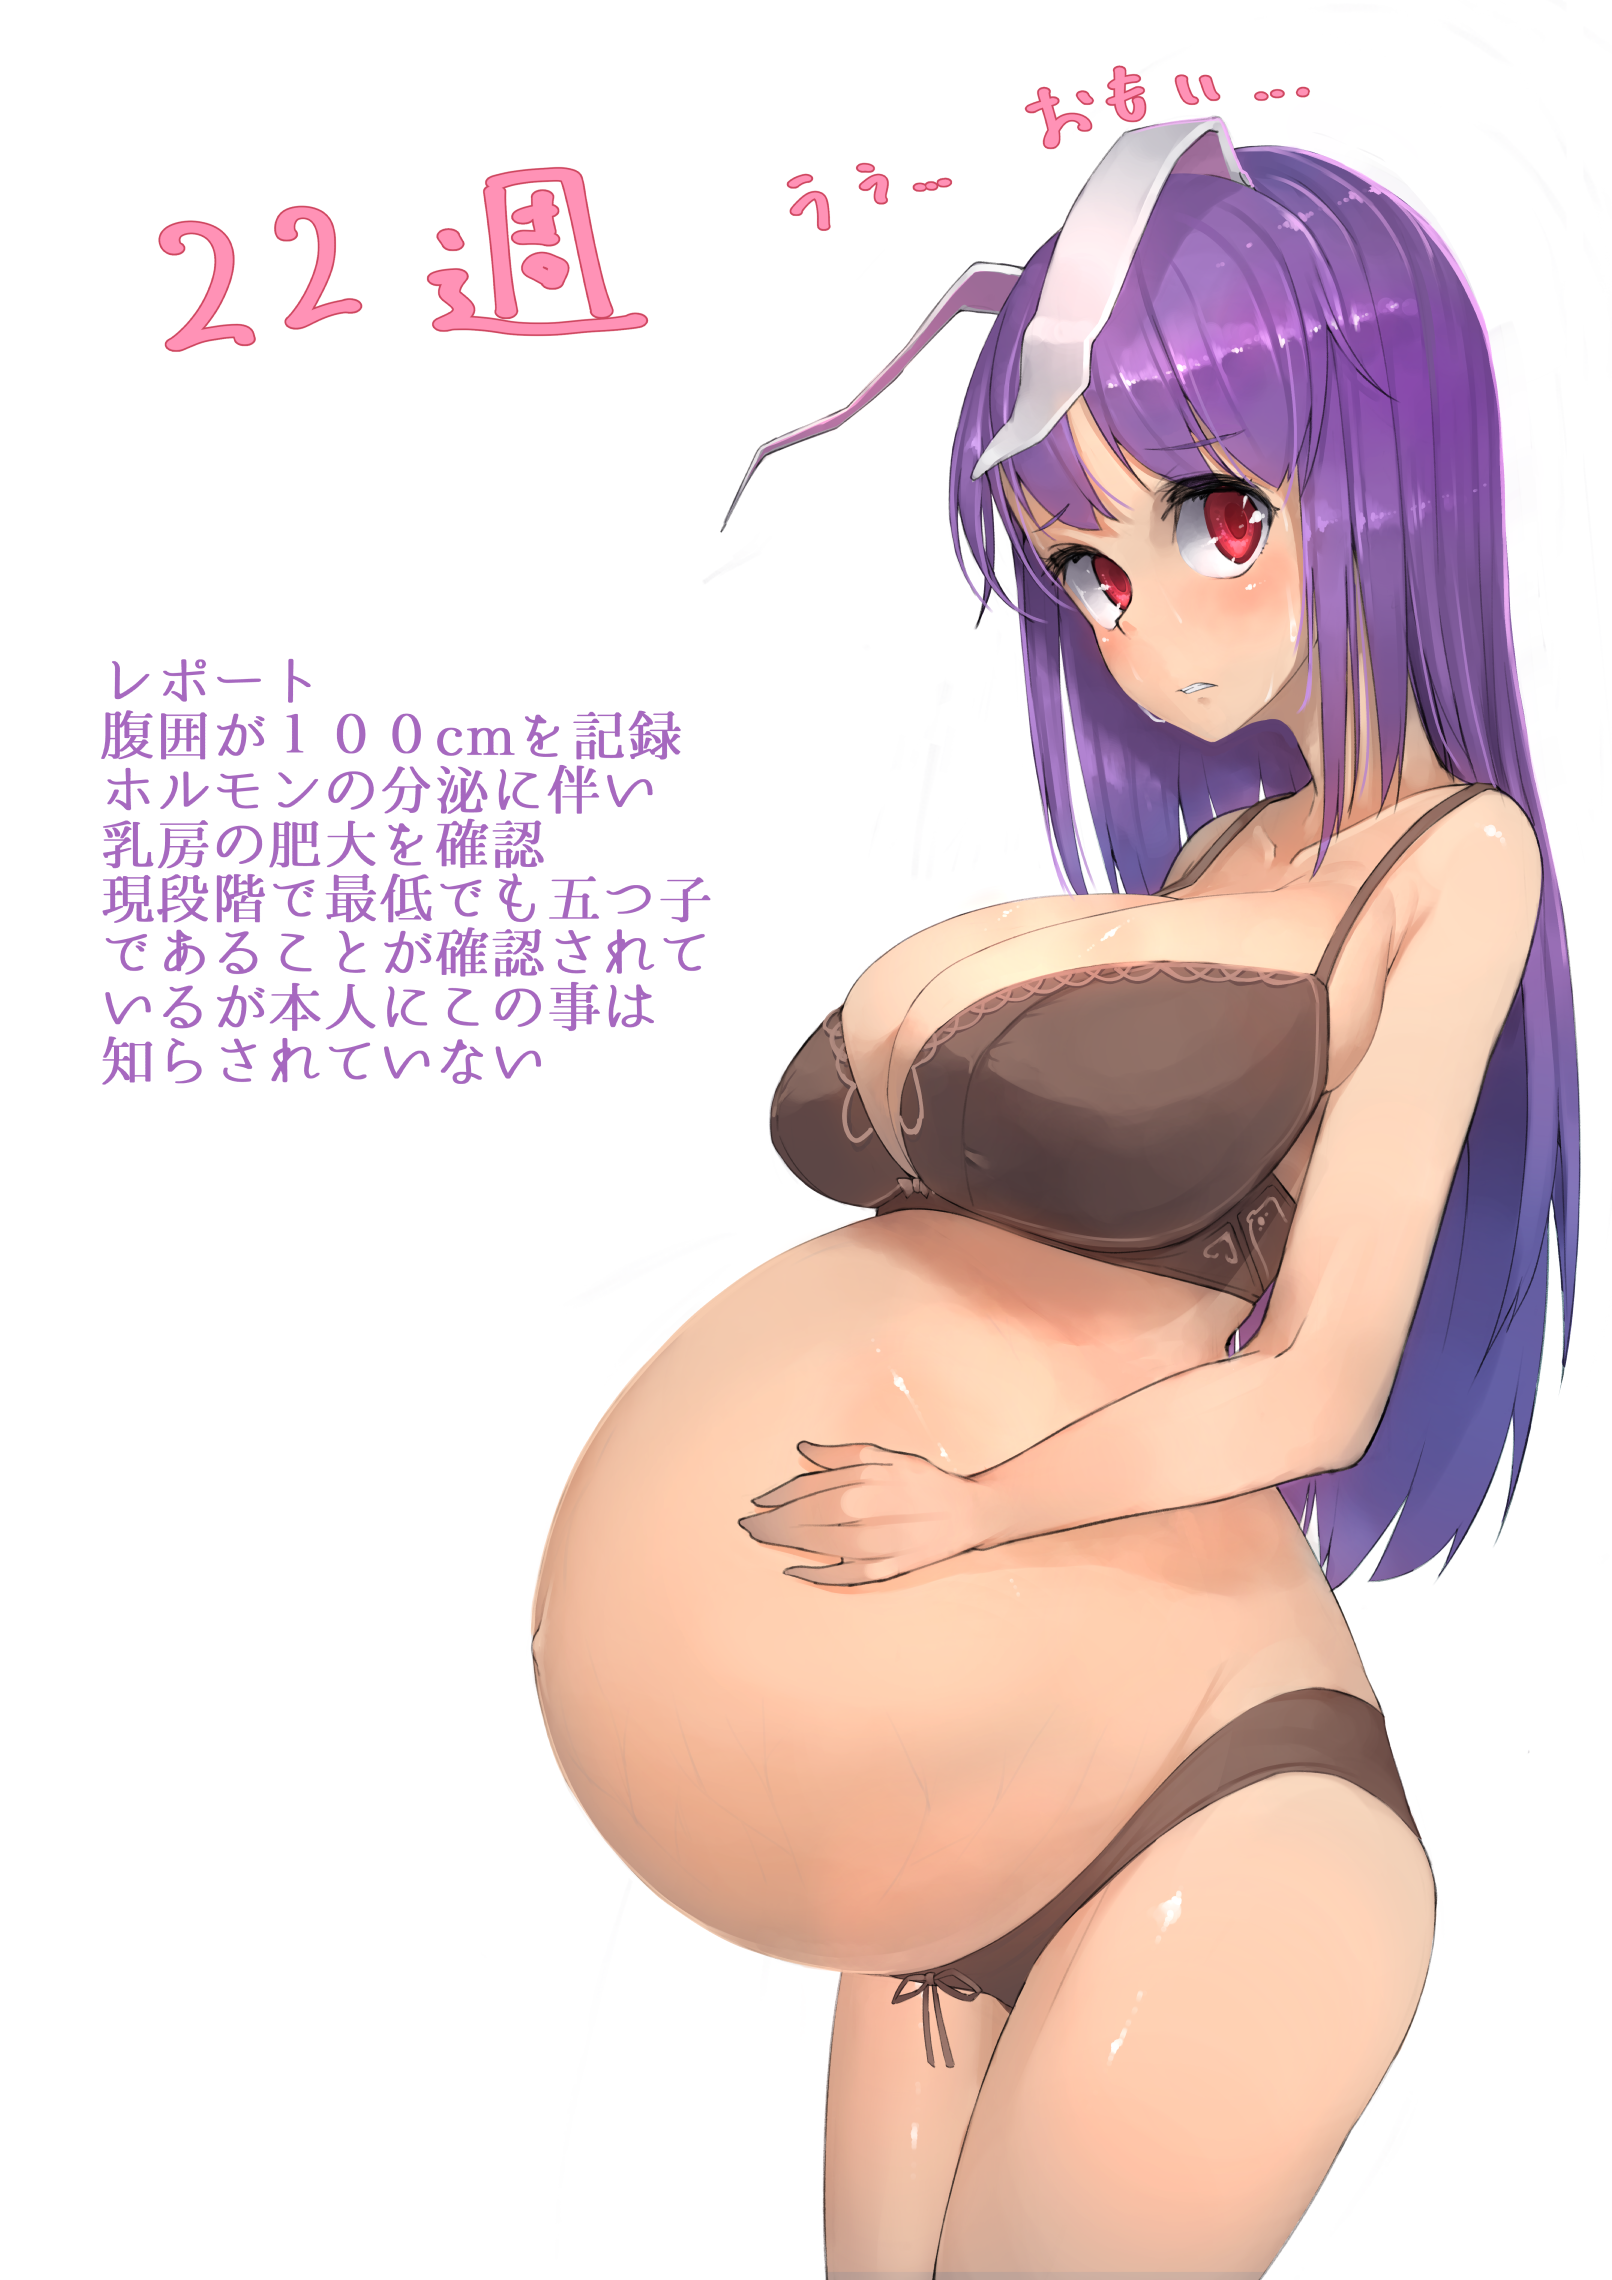 Ecchi pregnant - 🧡 Аниме арты с беременными тянками Аниме Amino Amino.